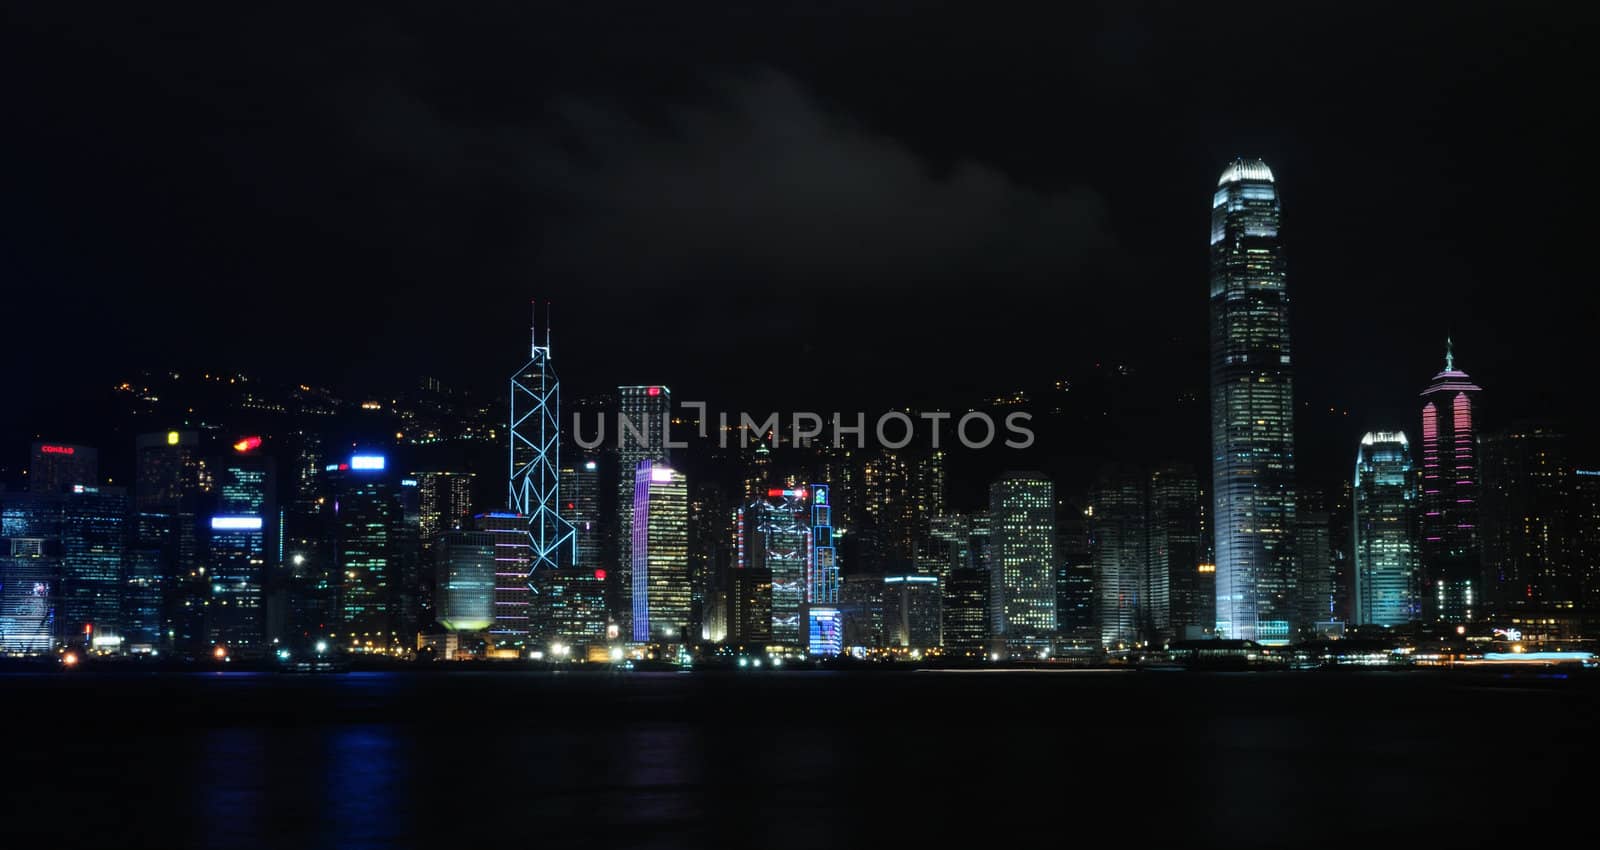 Hong Kong skyline during night with spectatular lights